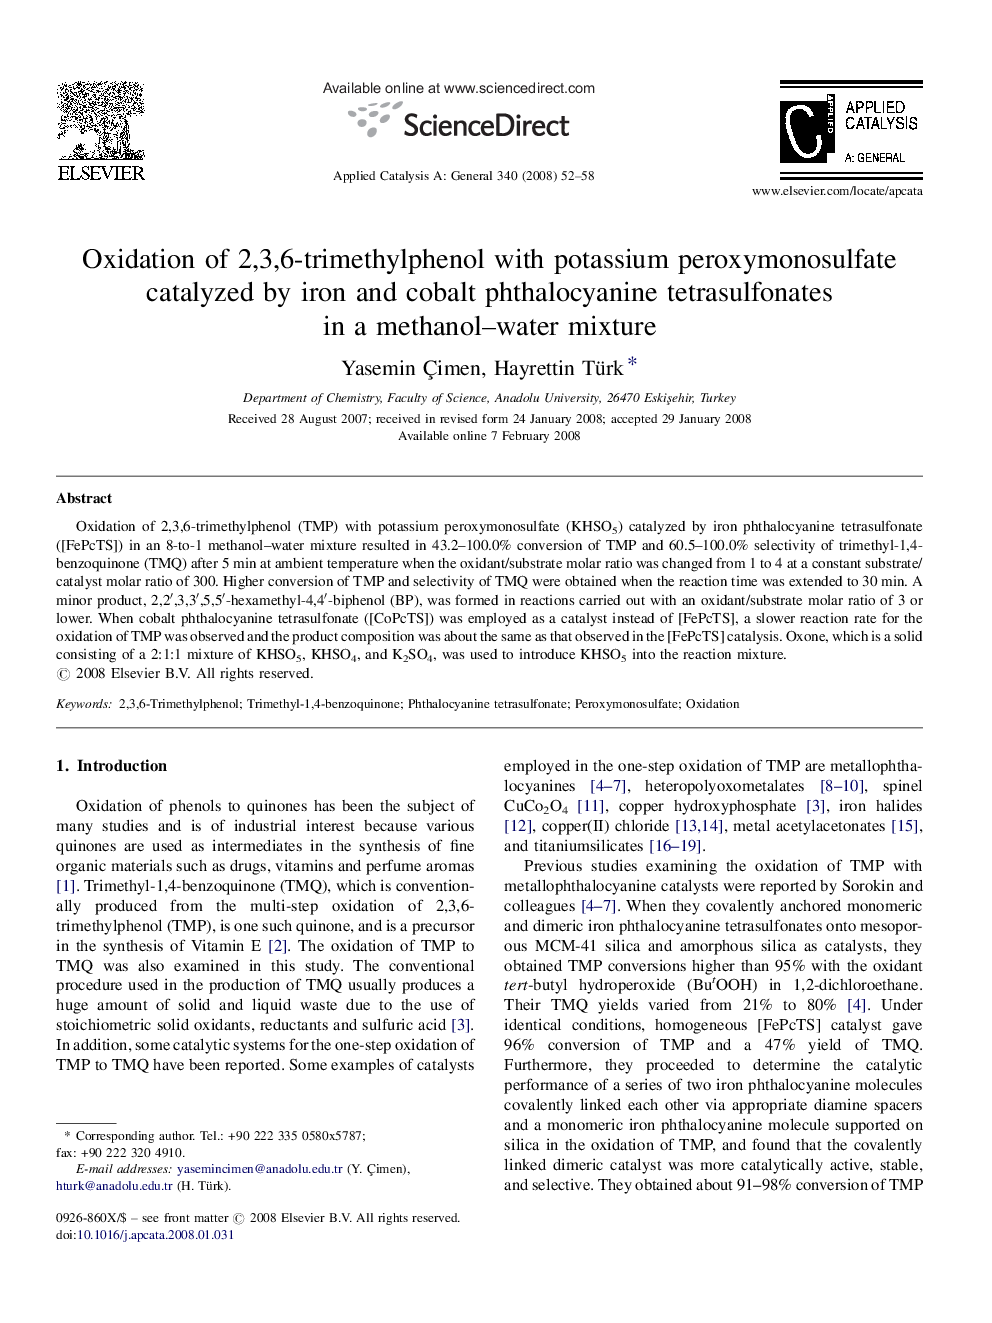 Oxidation of 2,3,6-trimethylphenol with potassium peroxymonosulfate catalyzed by iron and cobalt phthalocyanine tetrasulfonates in a methanol–water mixture